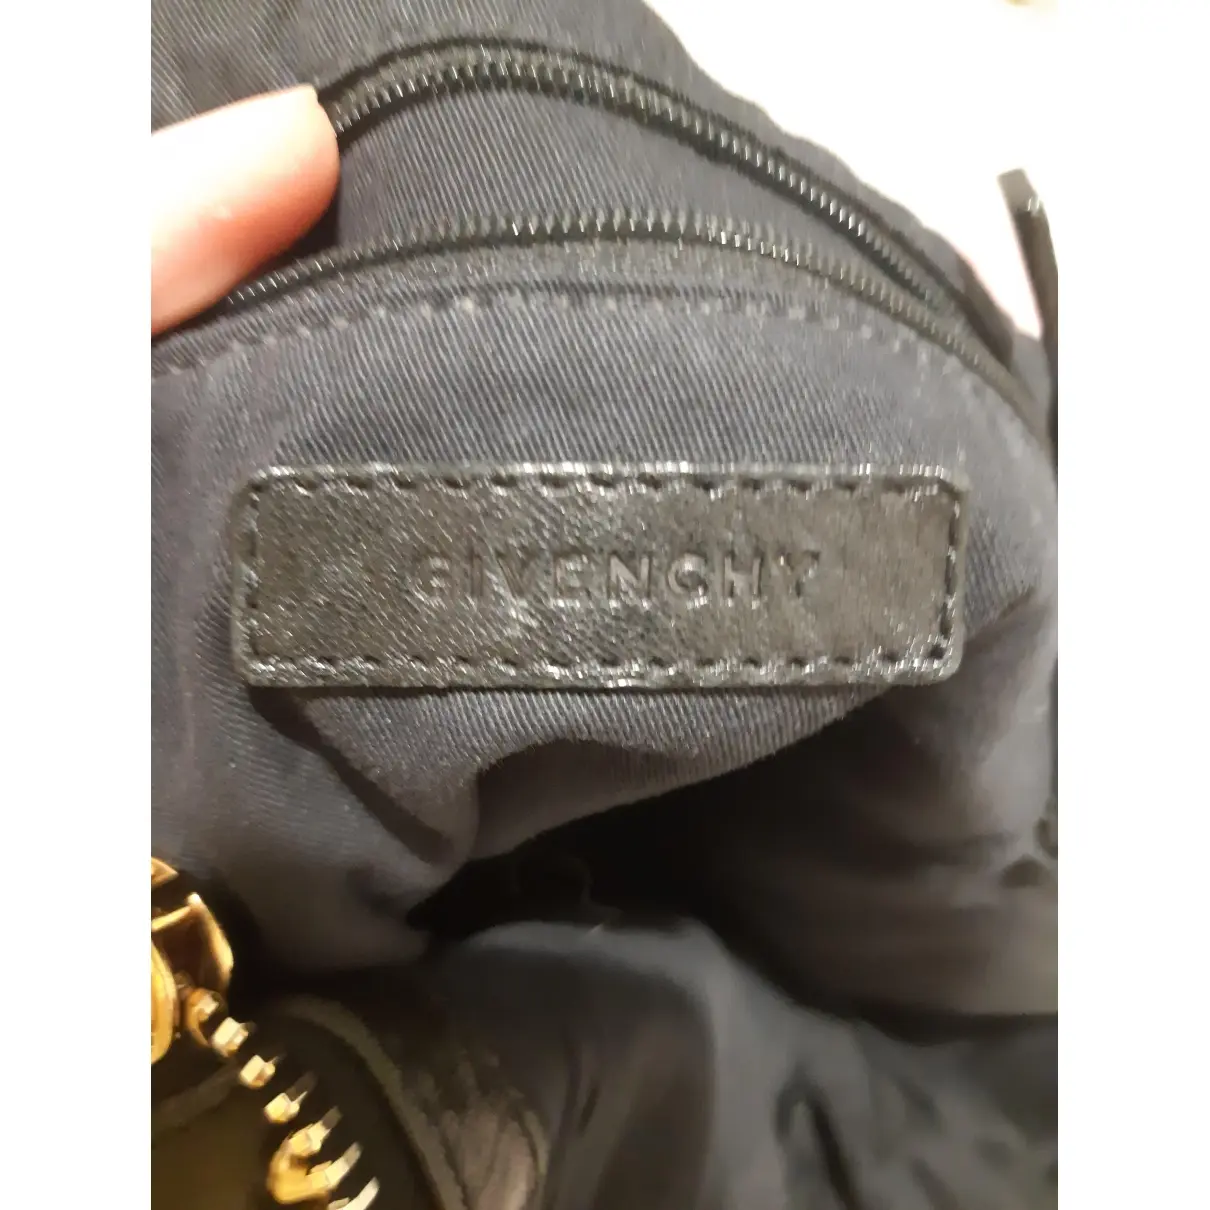 Buy Givenchy Leather handbag online